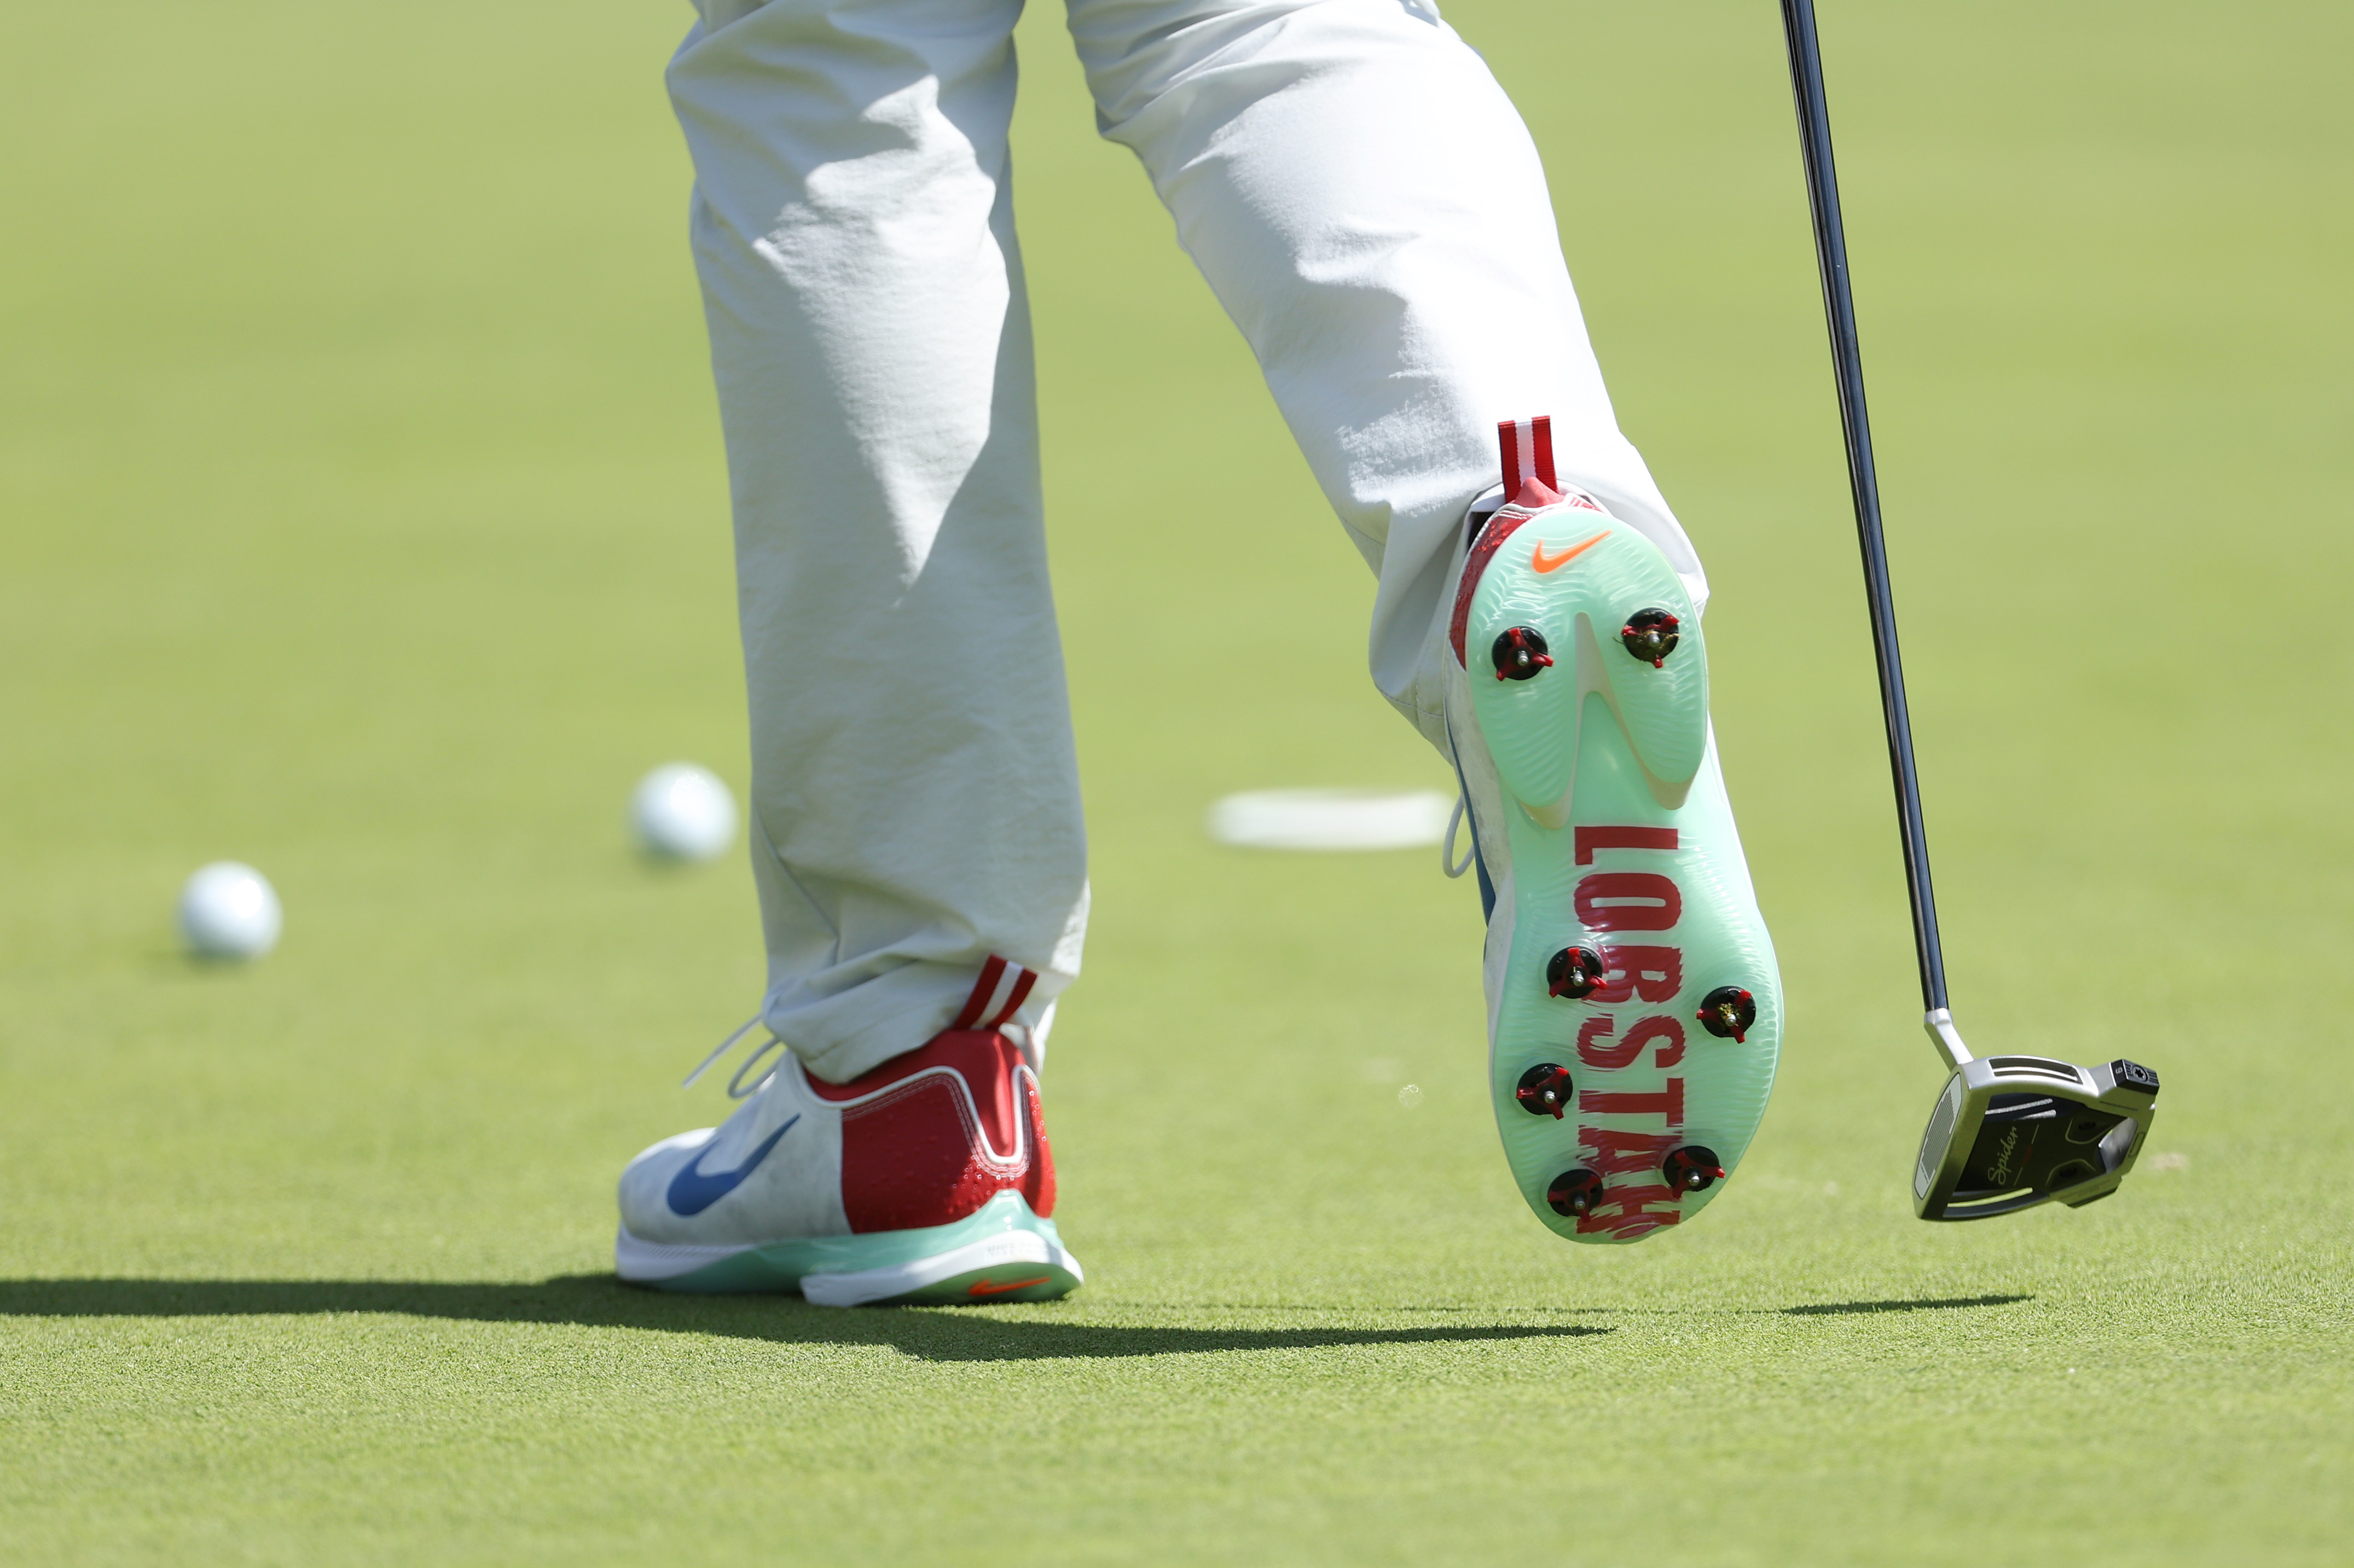 Nike's “Lobstah” shoes are making splash at U.S. Open | Golf Equipment: Clubs, Balls, | Golf Digest